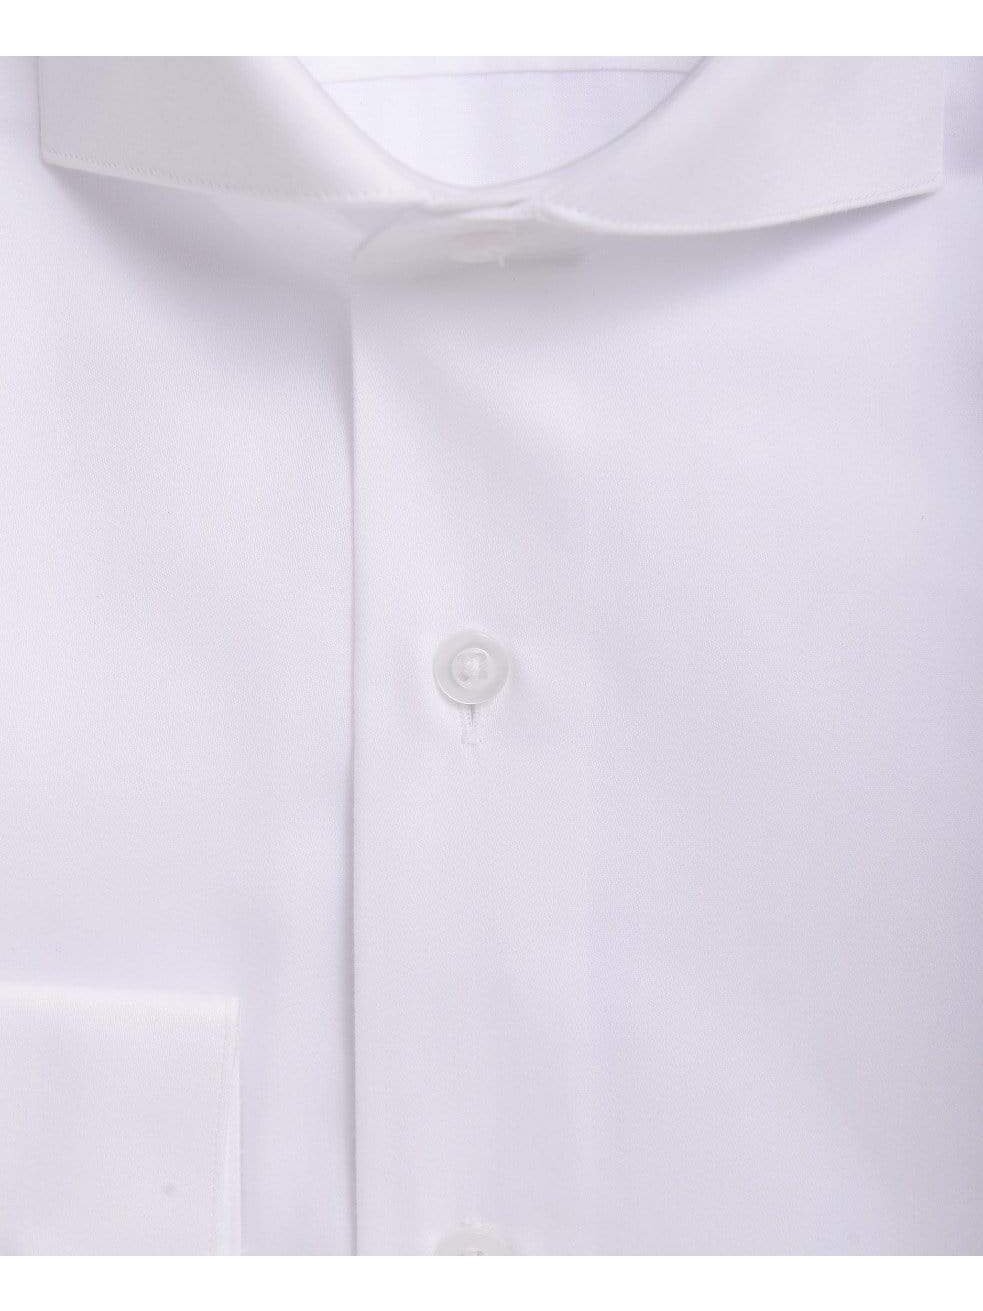 Modena SHIRTS Mens Slim Fit Solid White Cutaway Collar Cotton Blend Dress Shirt